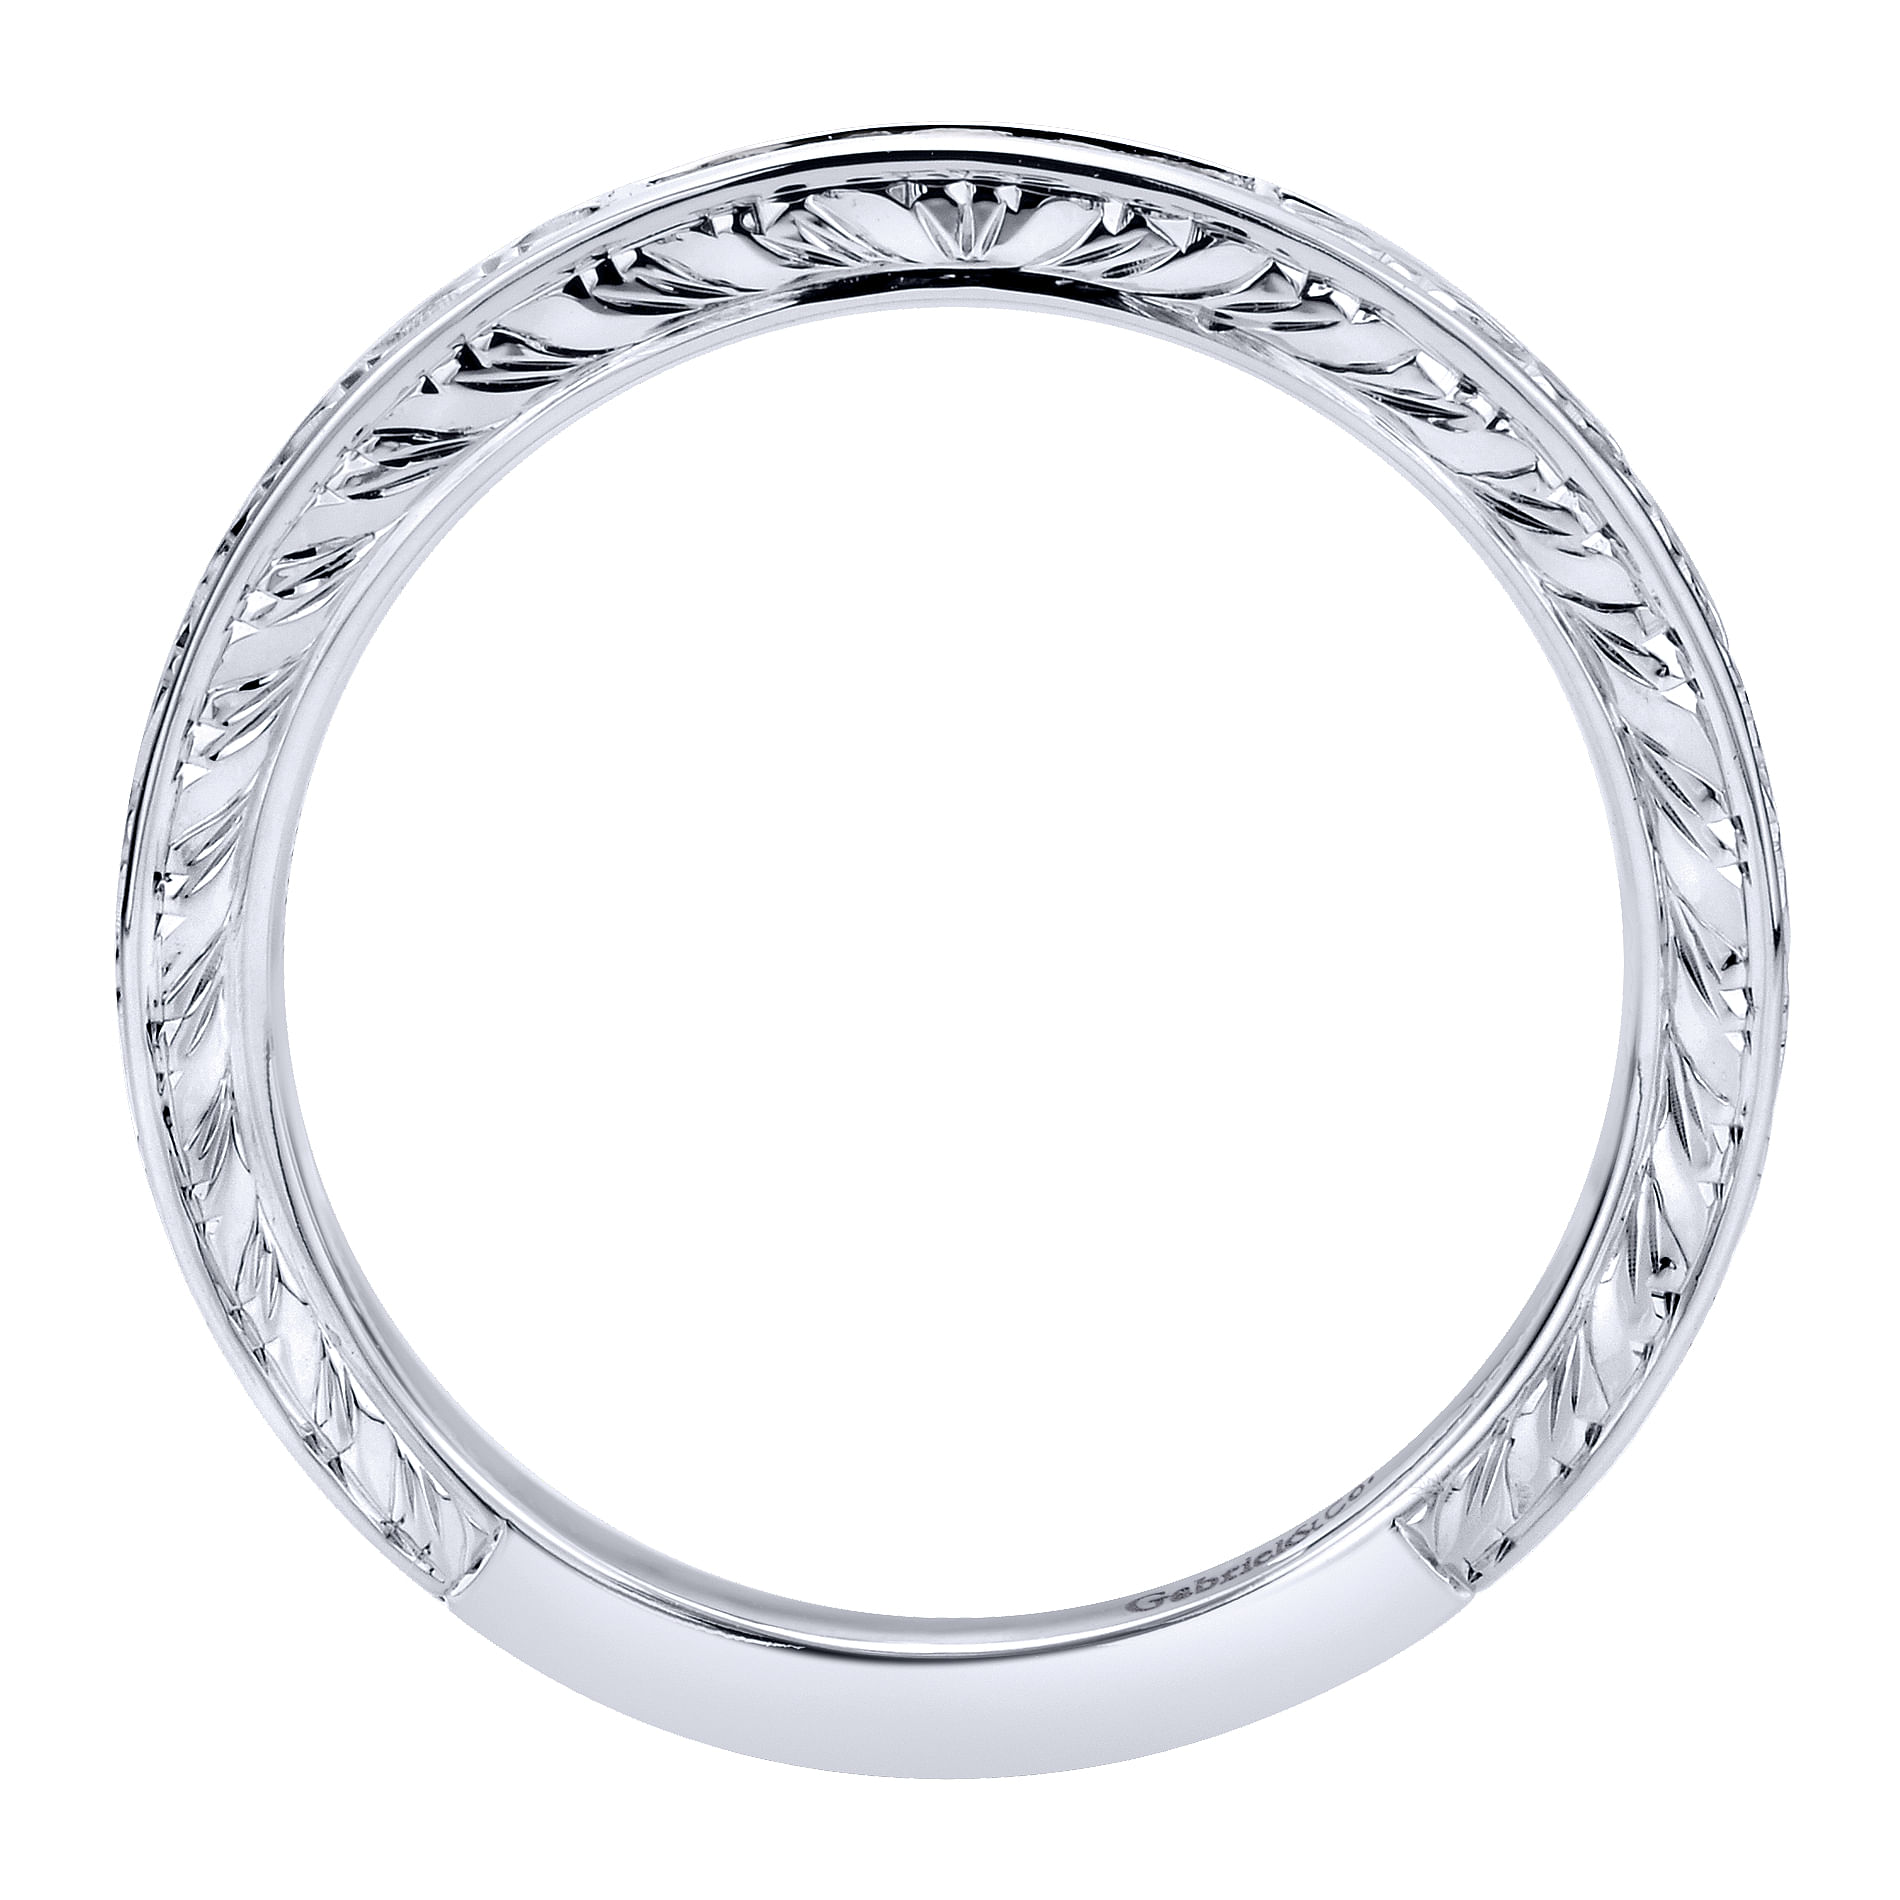 14K White Gold Princess Cut 5 Stone Channel Set Diamond Wedding Band with Engraving